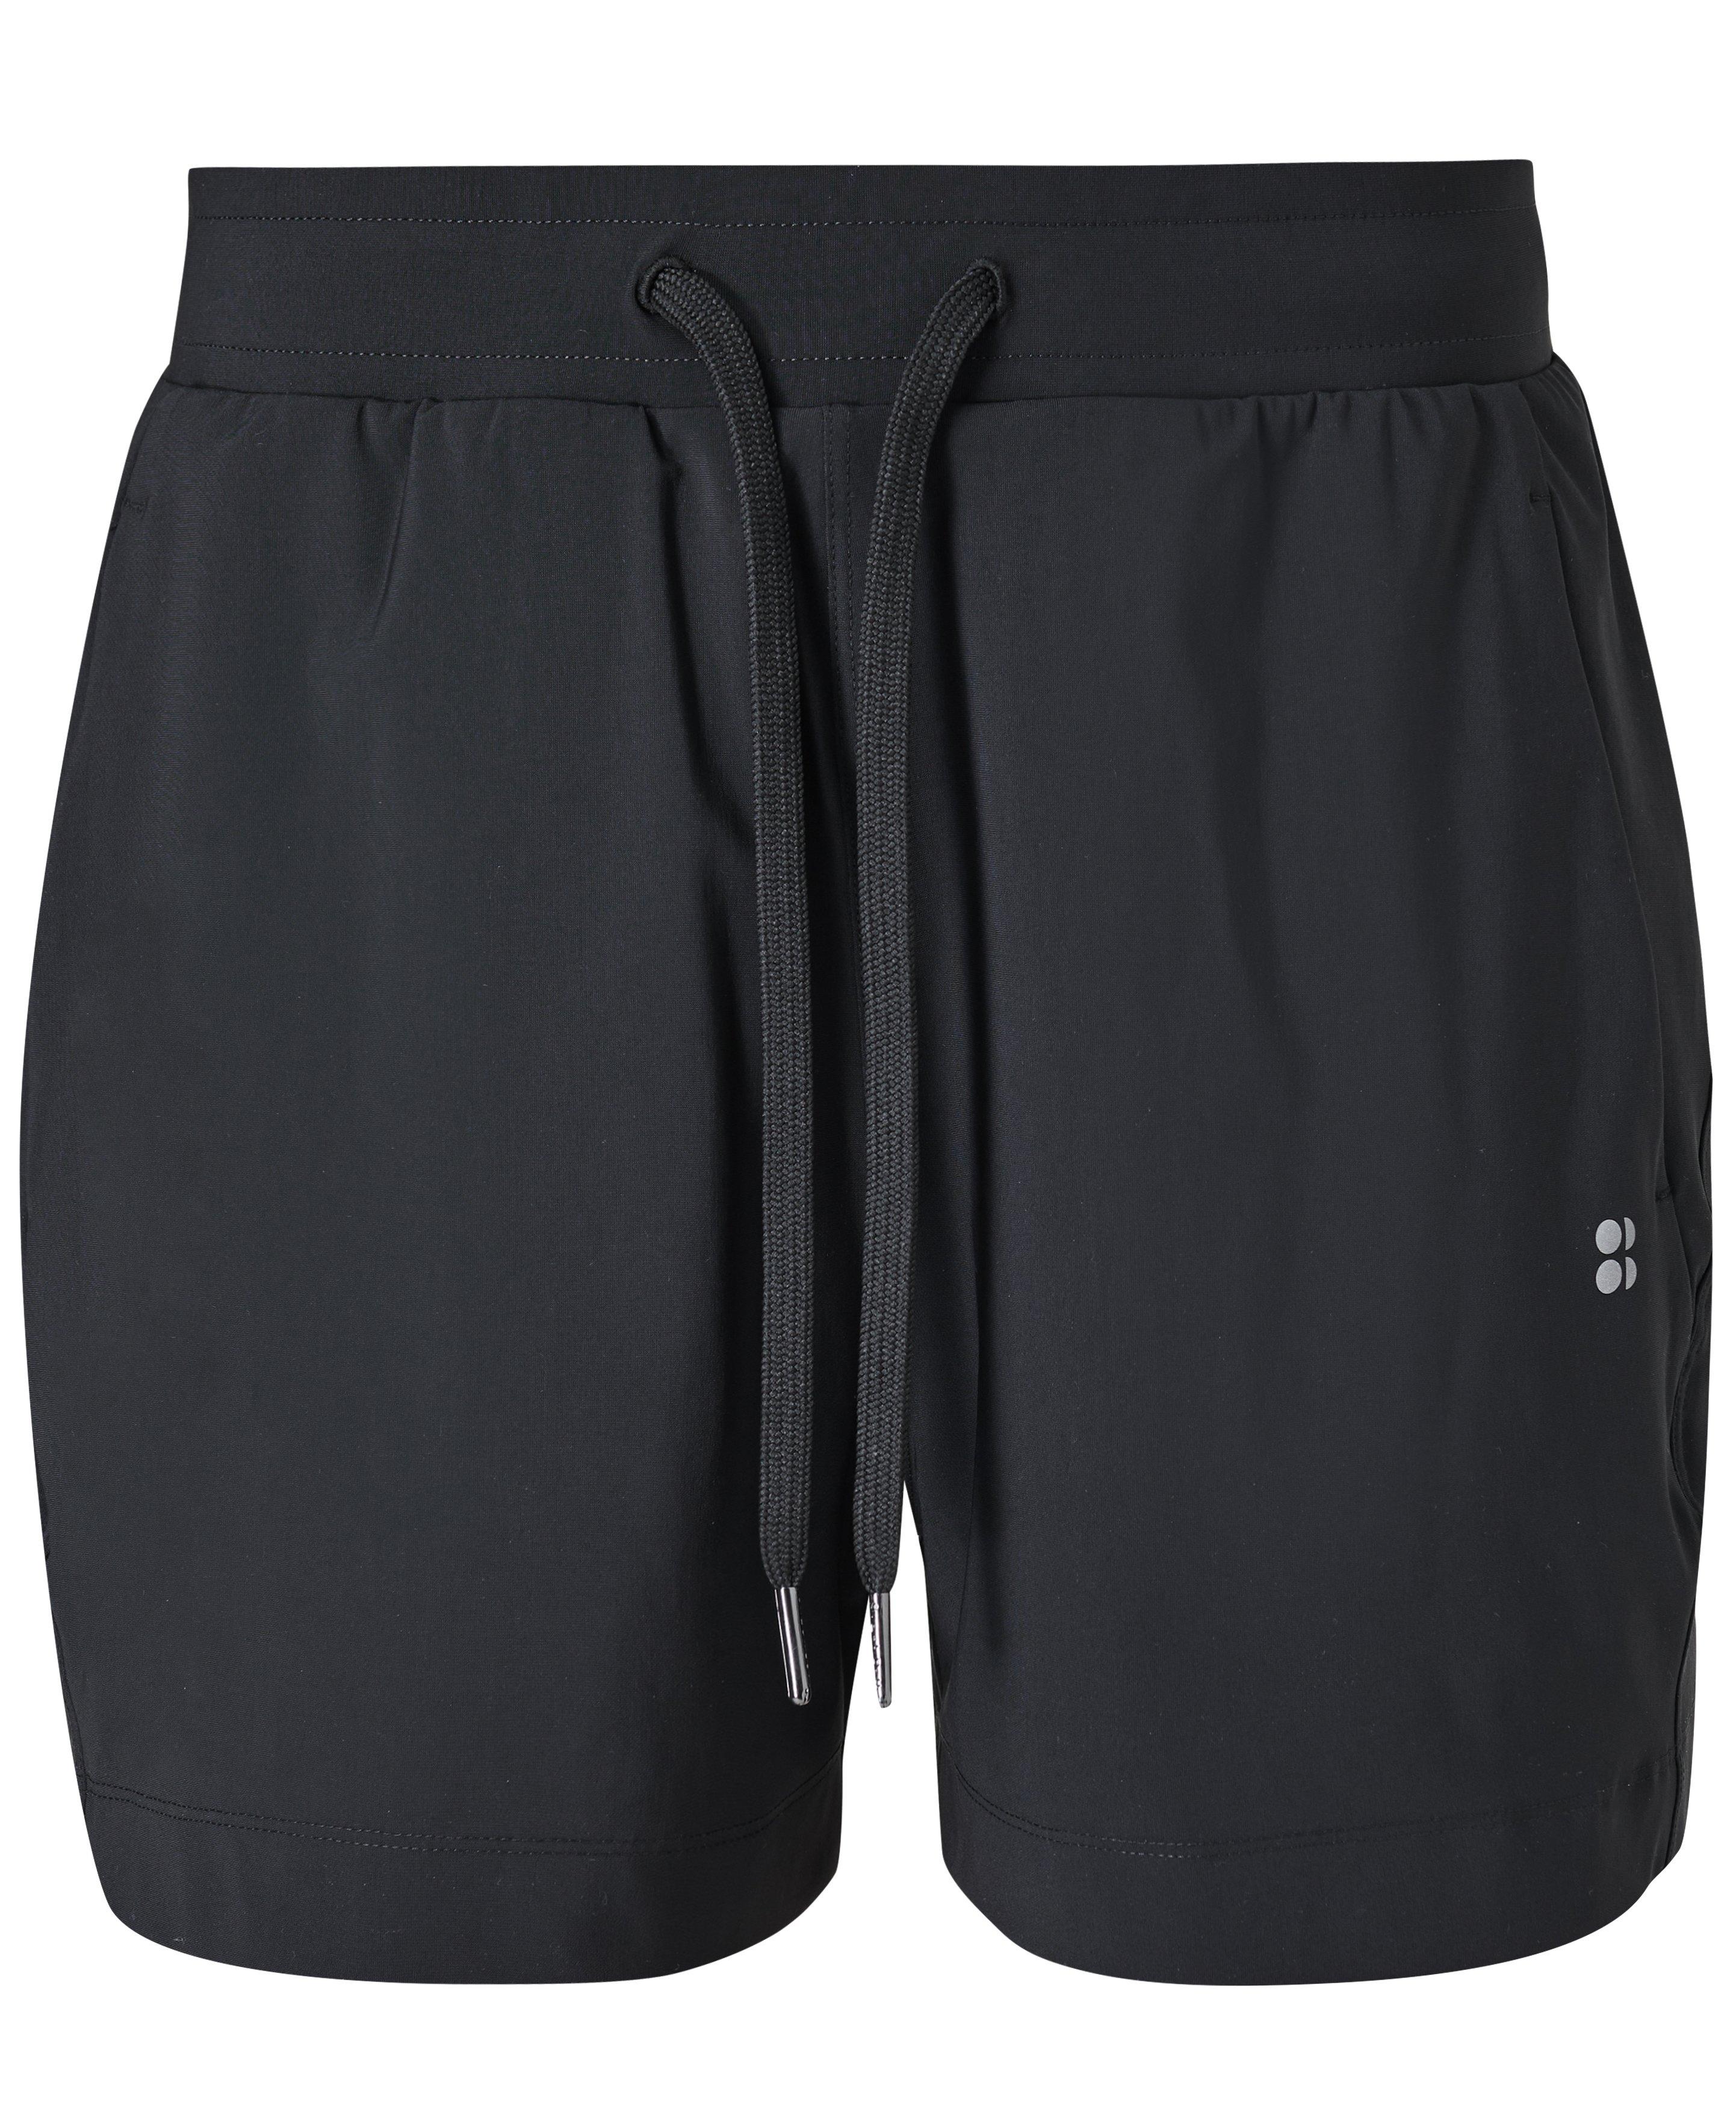 Explorer Shorts - Black | Skorts Sweaty Shorts Women\'s + Betty 